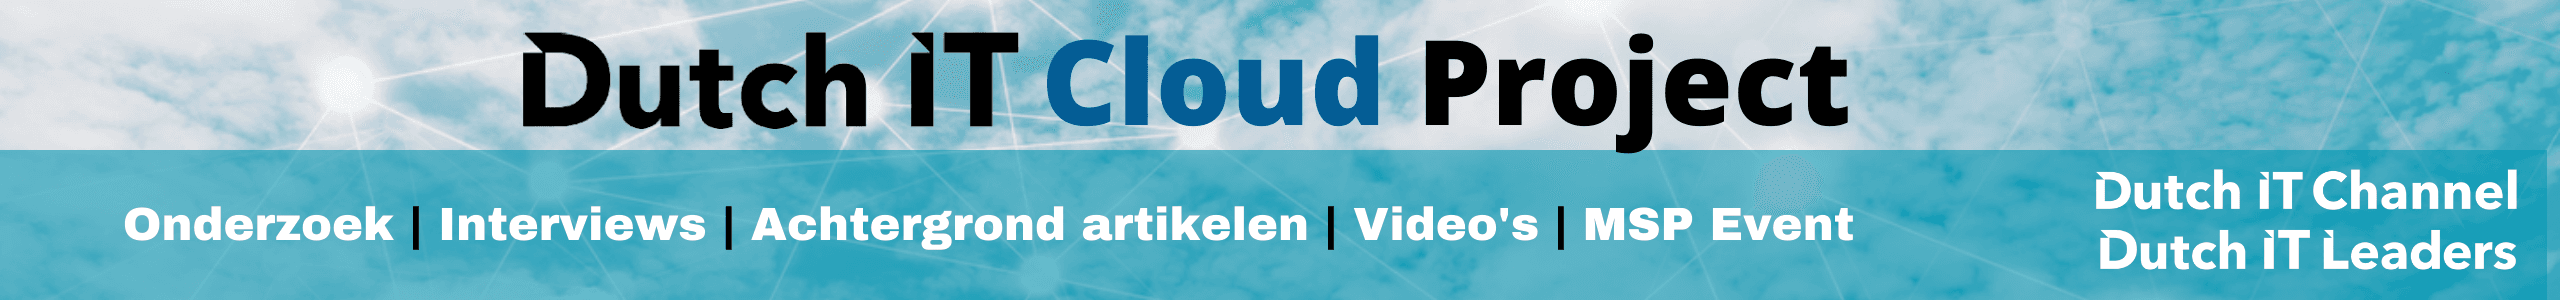 DIC Dutch IT Cloud Project